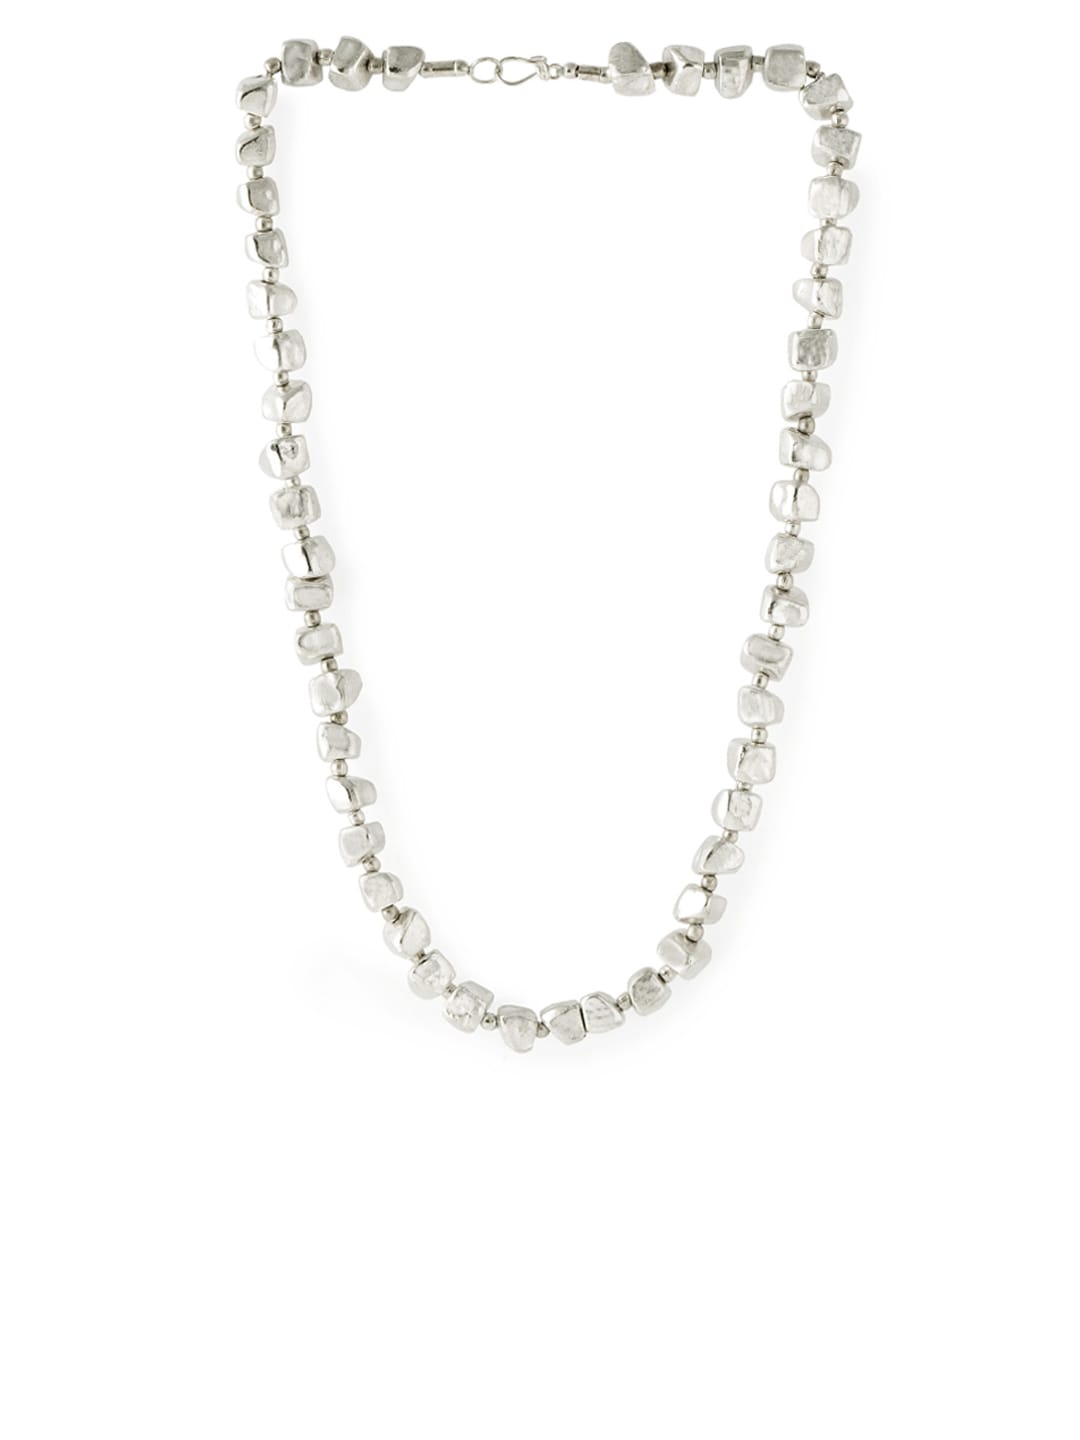 Pitaraa Silver Nugget Long Necklace